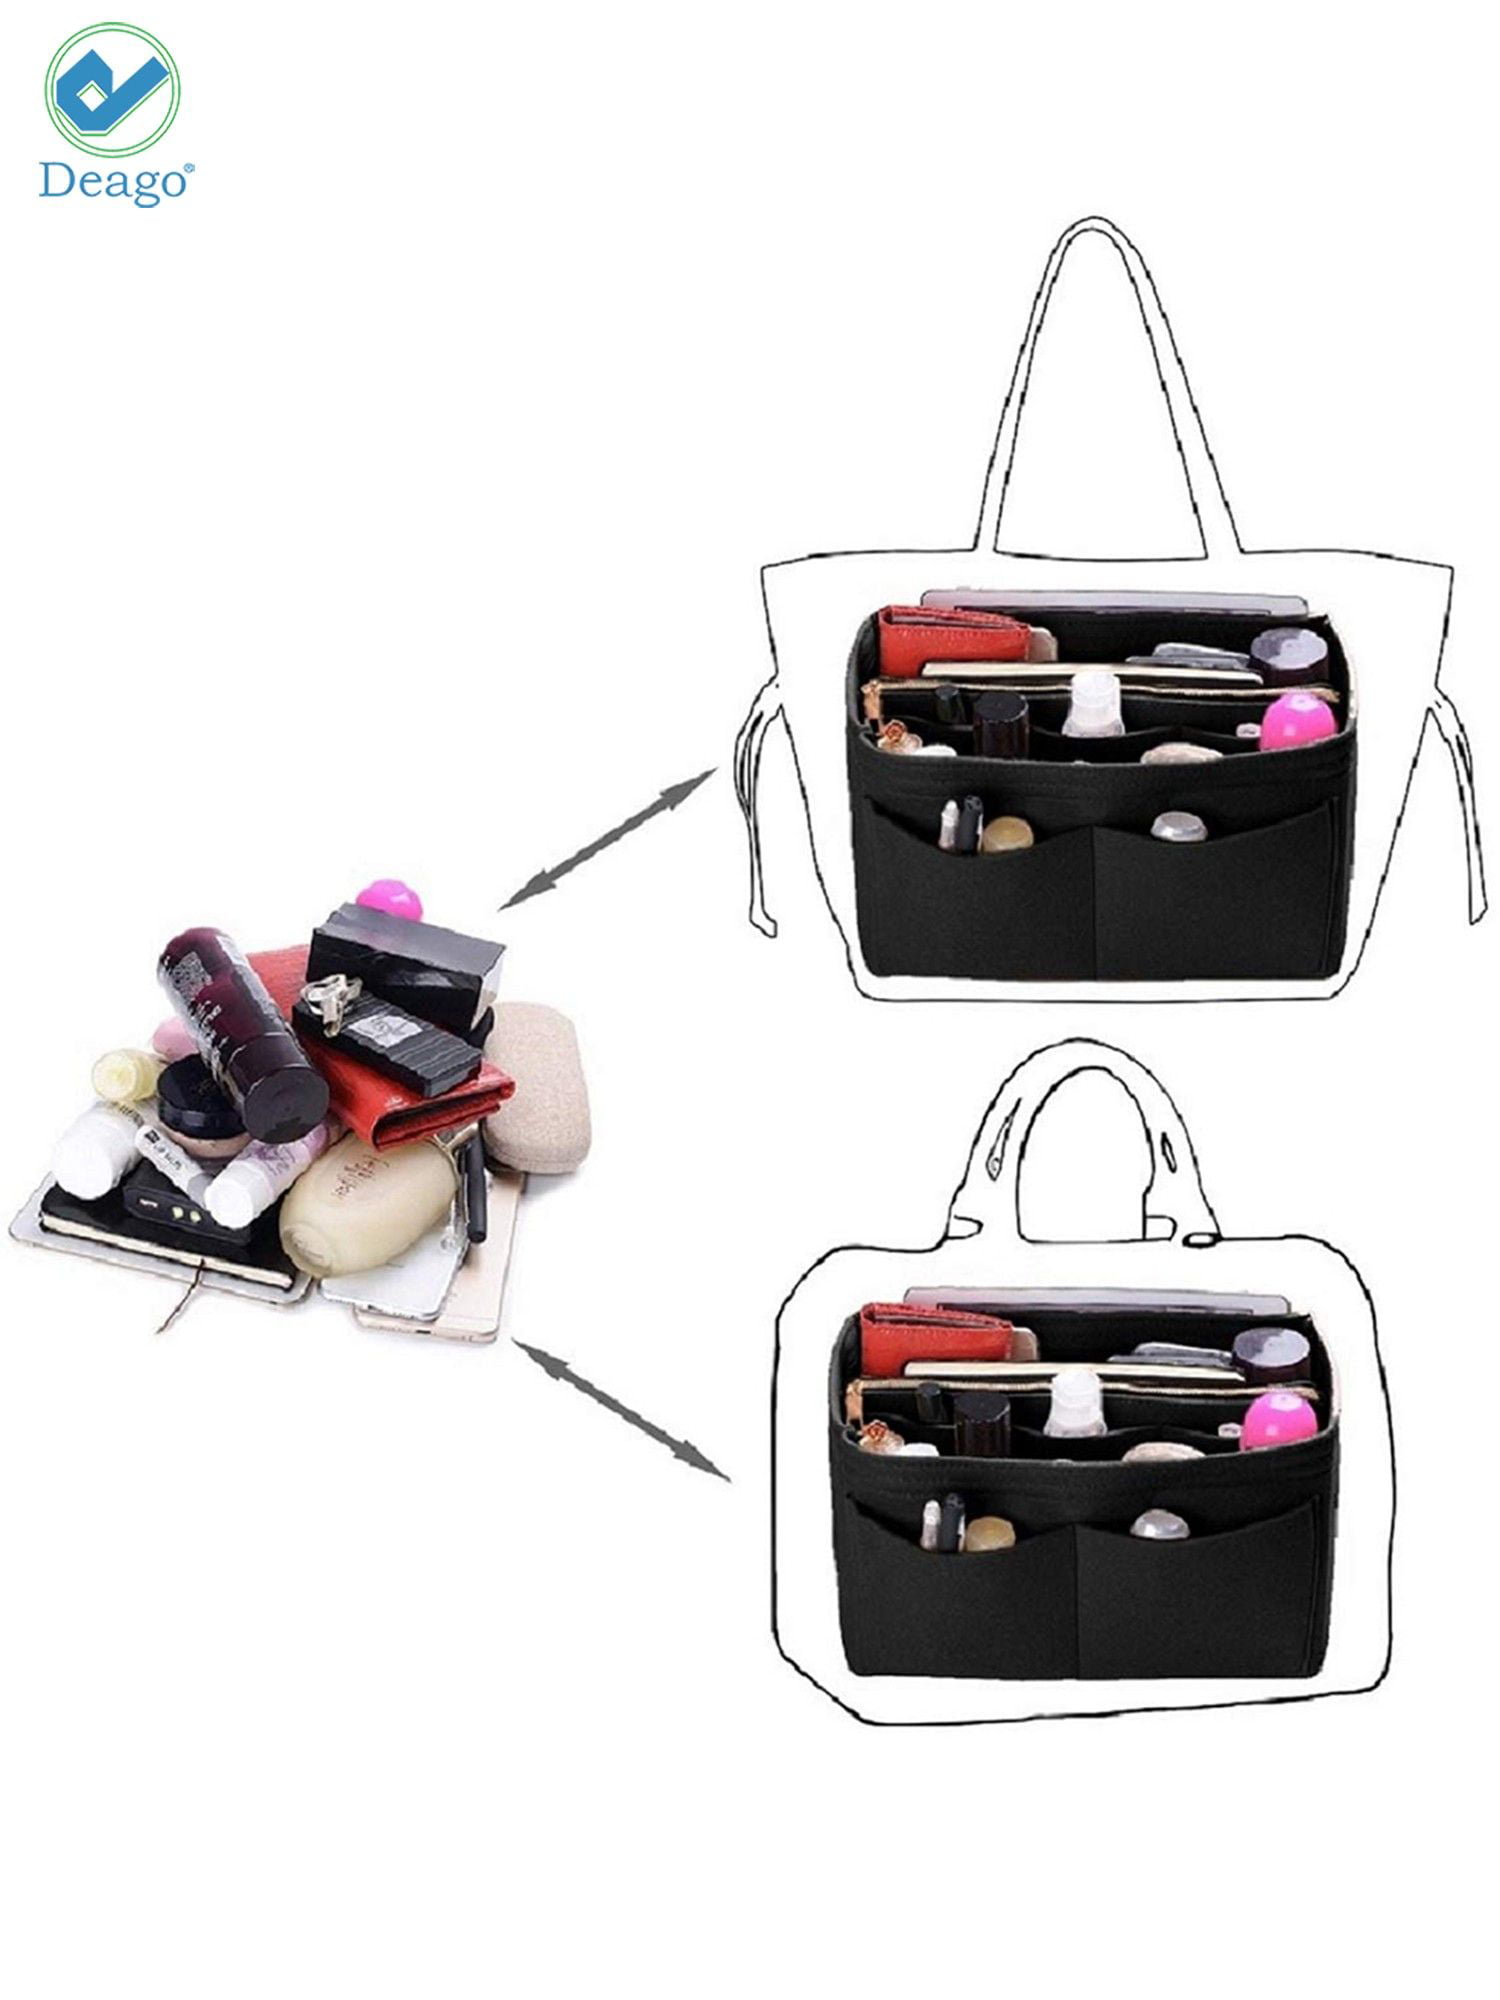 Deago Handbag Organizer Felt Insert Bag in Bag with Zipper Purse Tote  Shaper For LV Speedy Neverfull Le Pliage (9.84*3.9*3.15) 